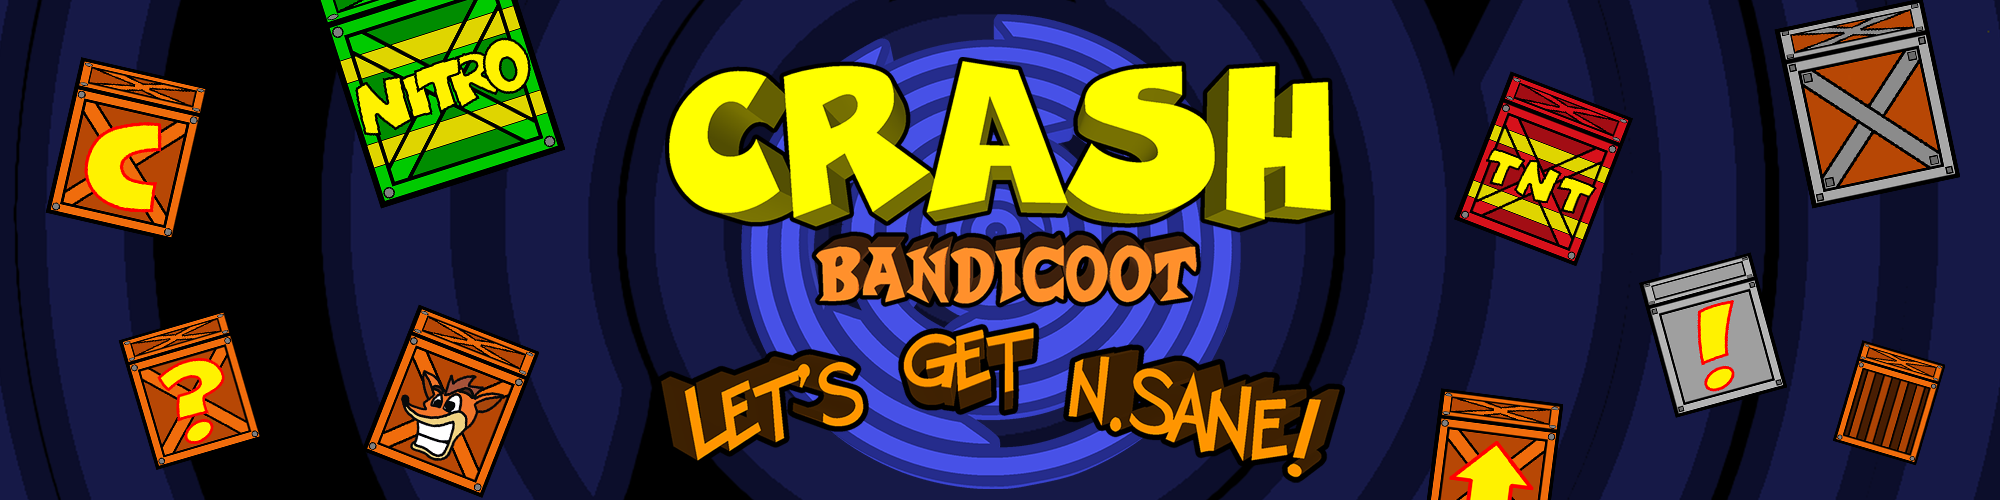 Crash Bandicoot: Let's Get N. Sane!